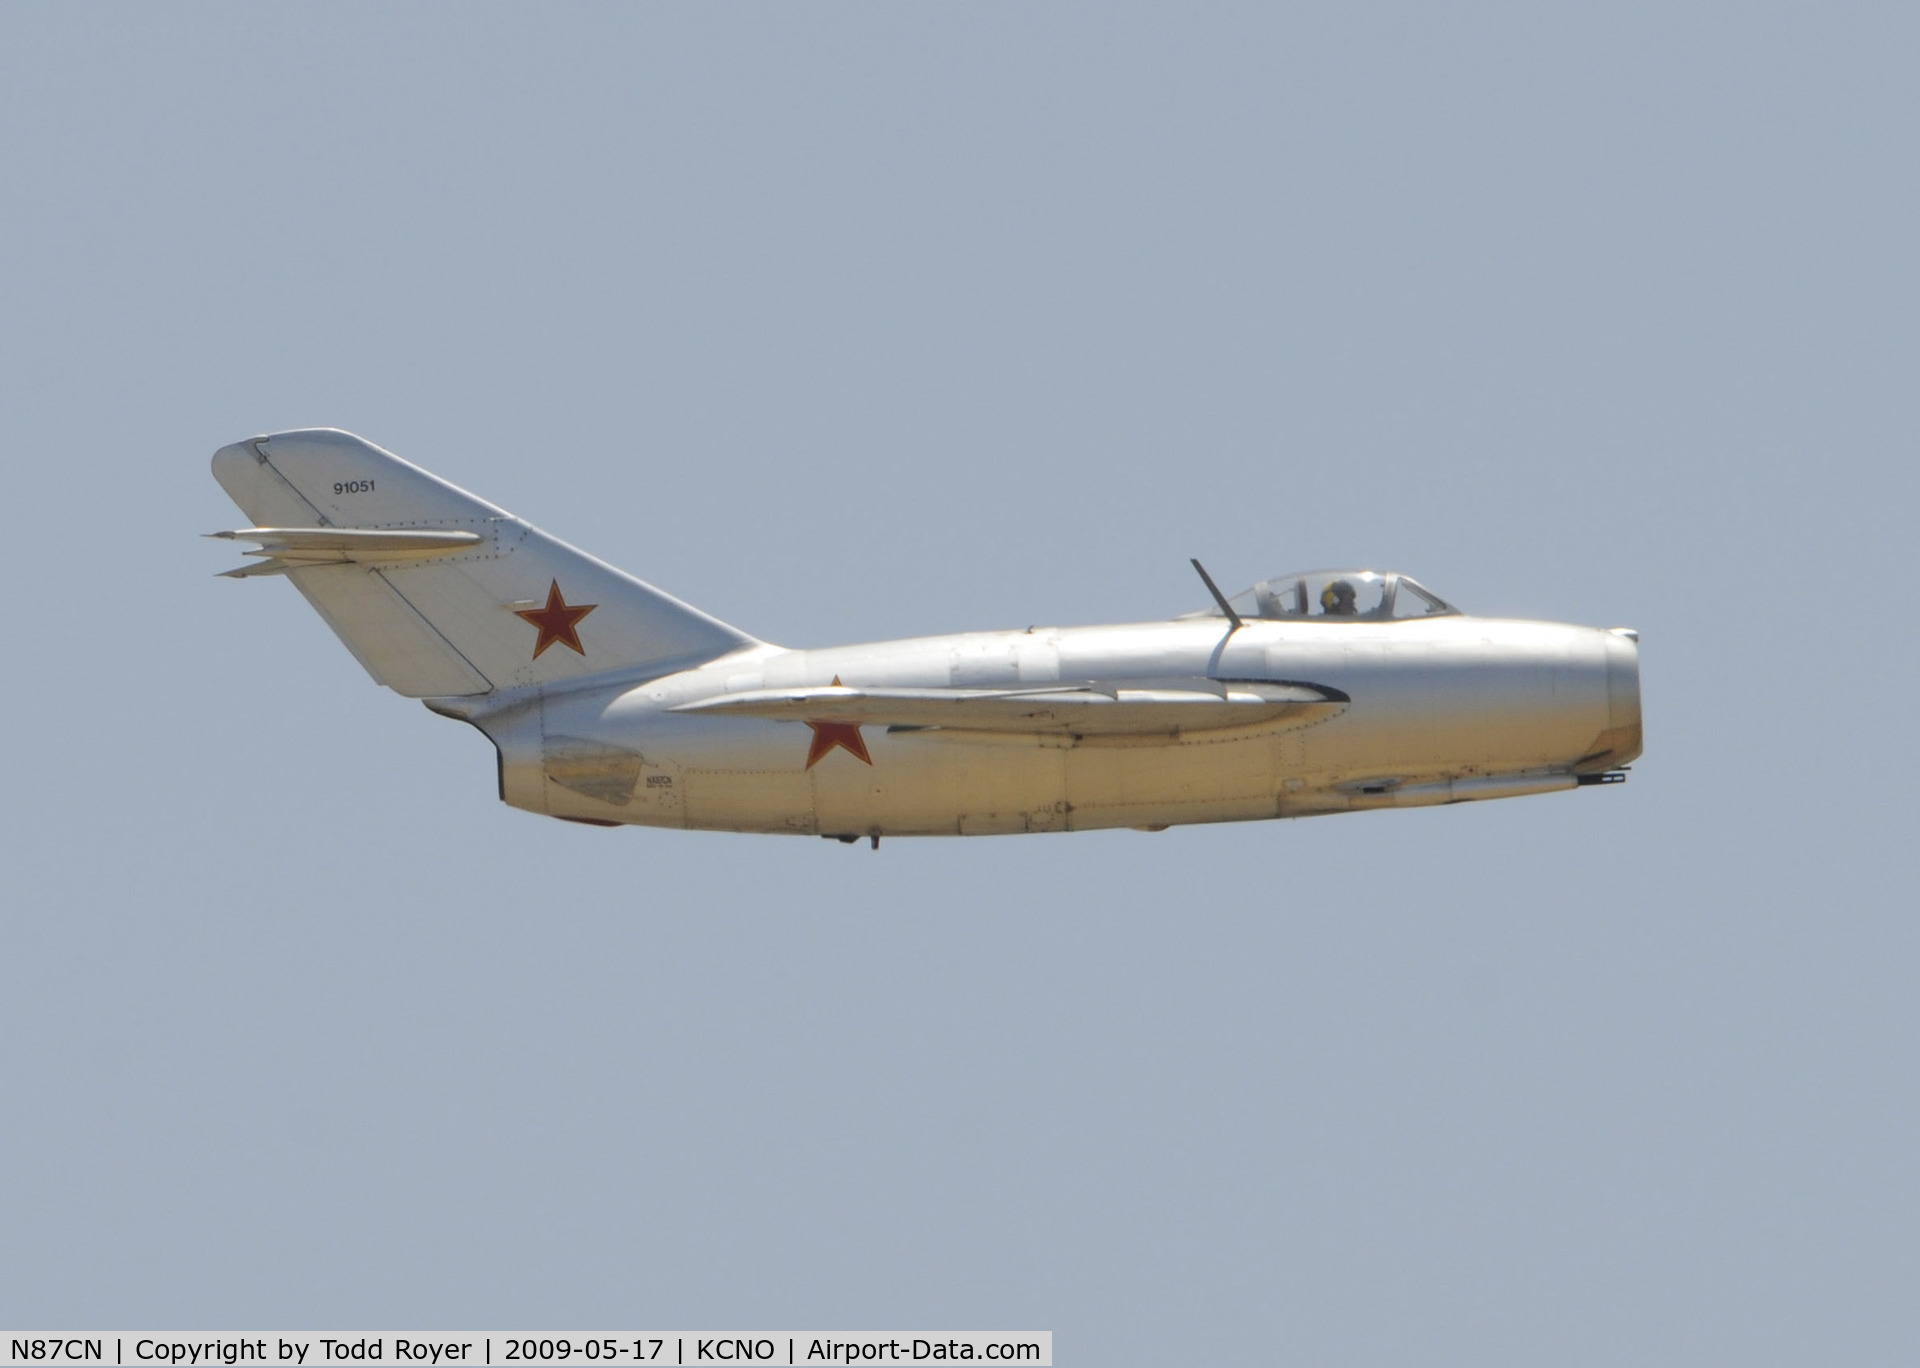 N87CN, Mikoyan-Gurevich MiG-15 C/N 910-51, Chino Airshow 2009